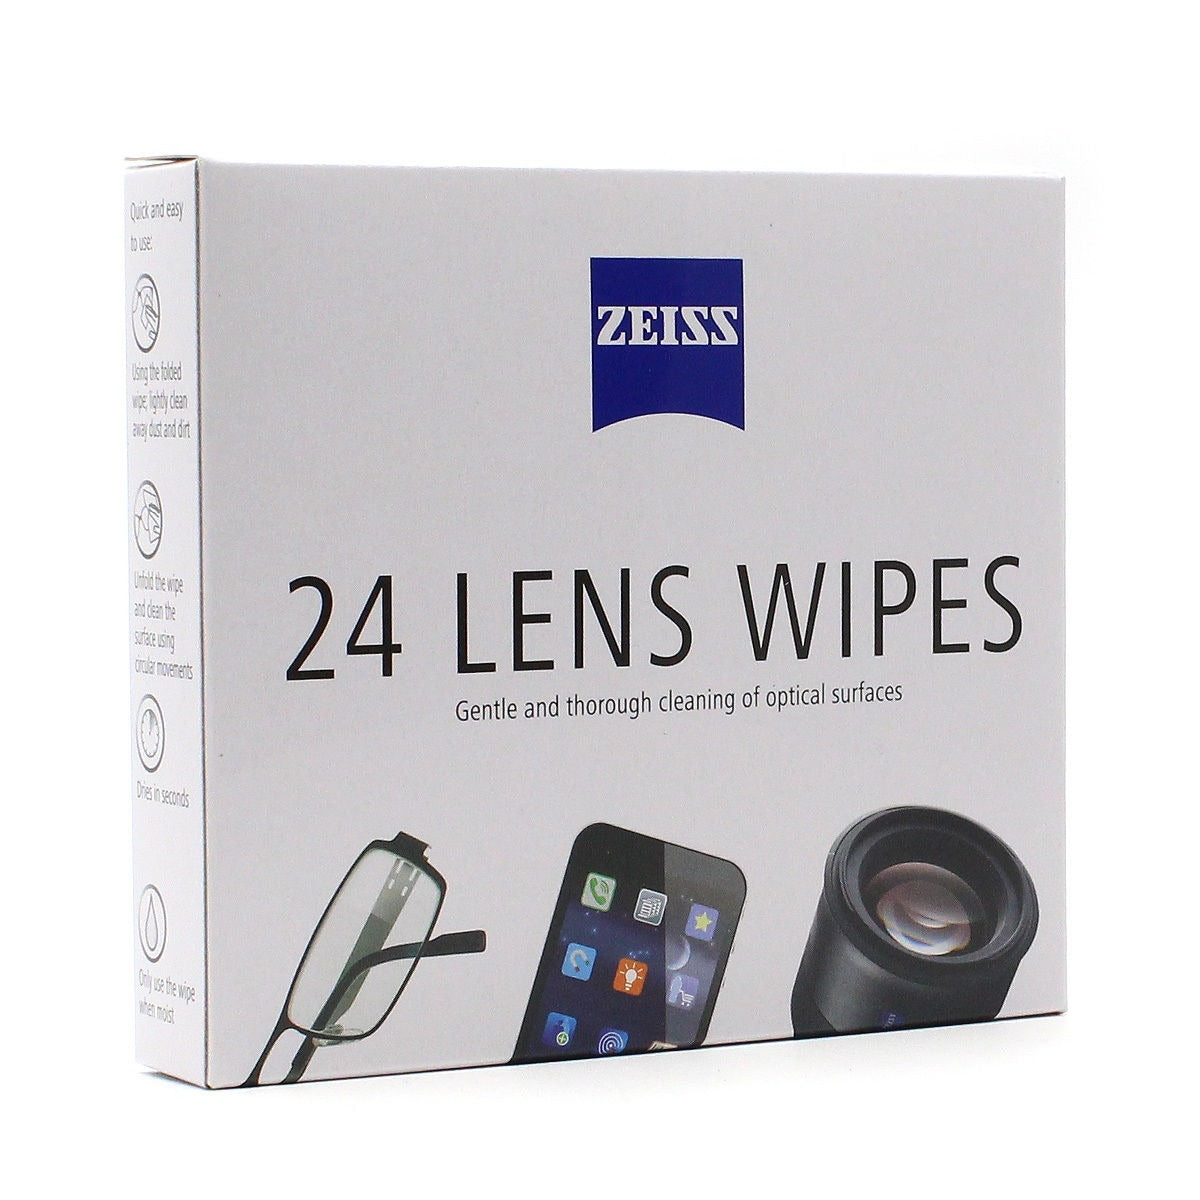 Bundle of Lens Wipes